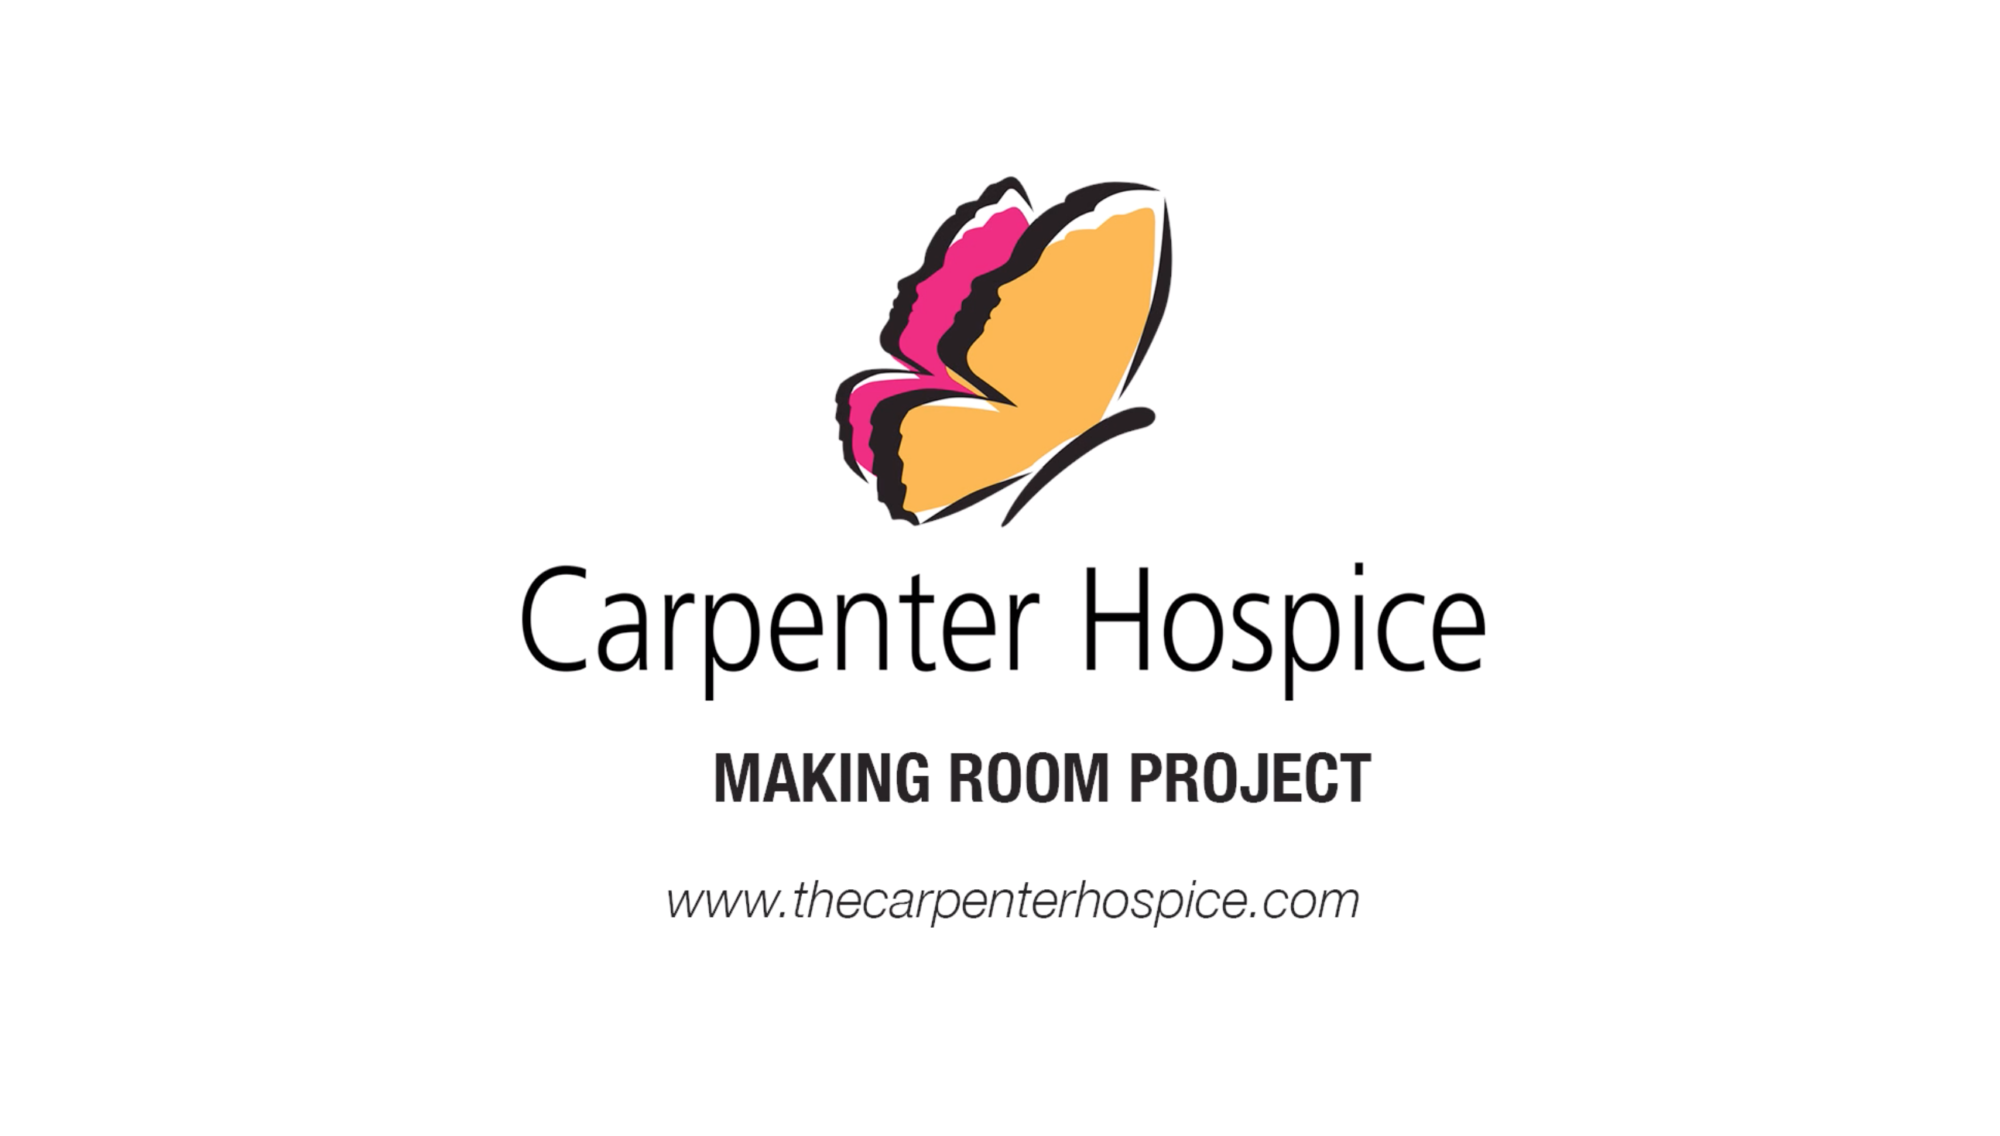 Carpenter Hospice logo - Making Room Project - www.thecarpenterhospice.com